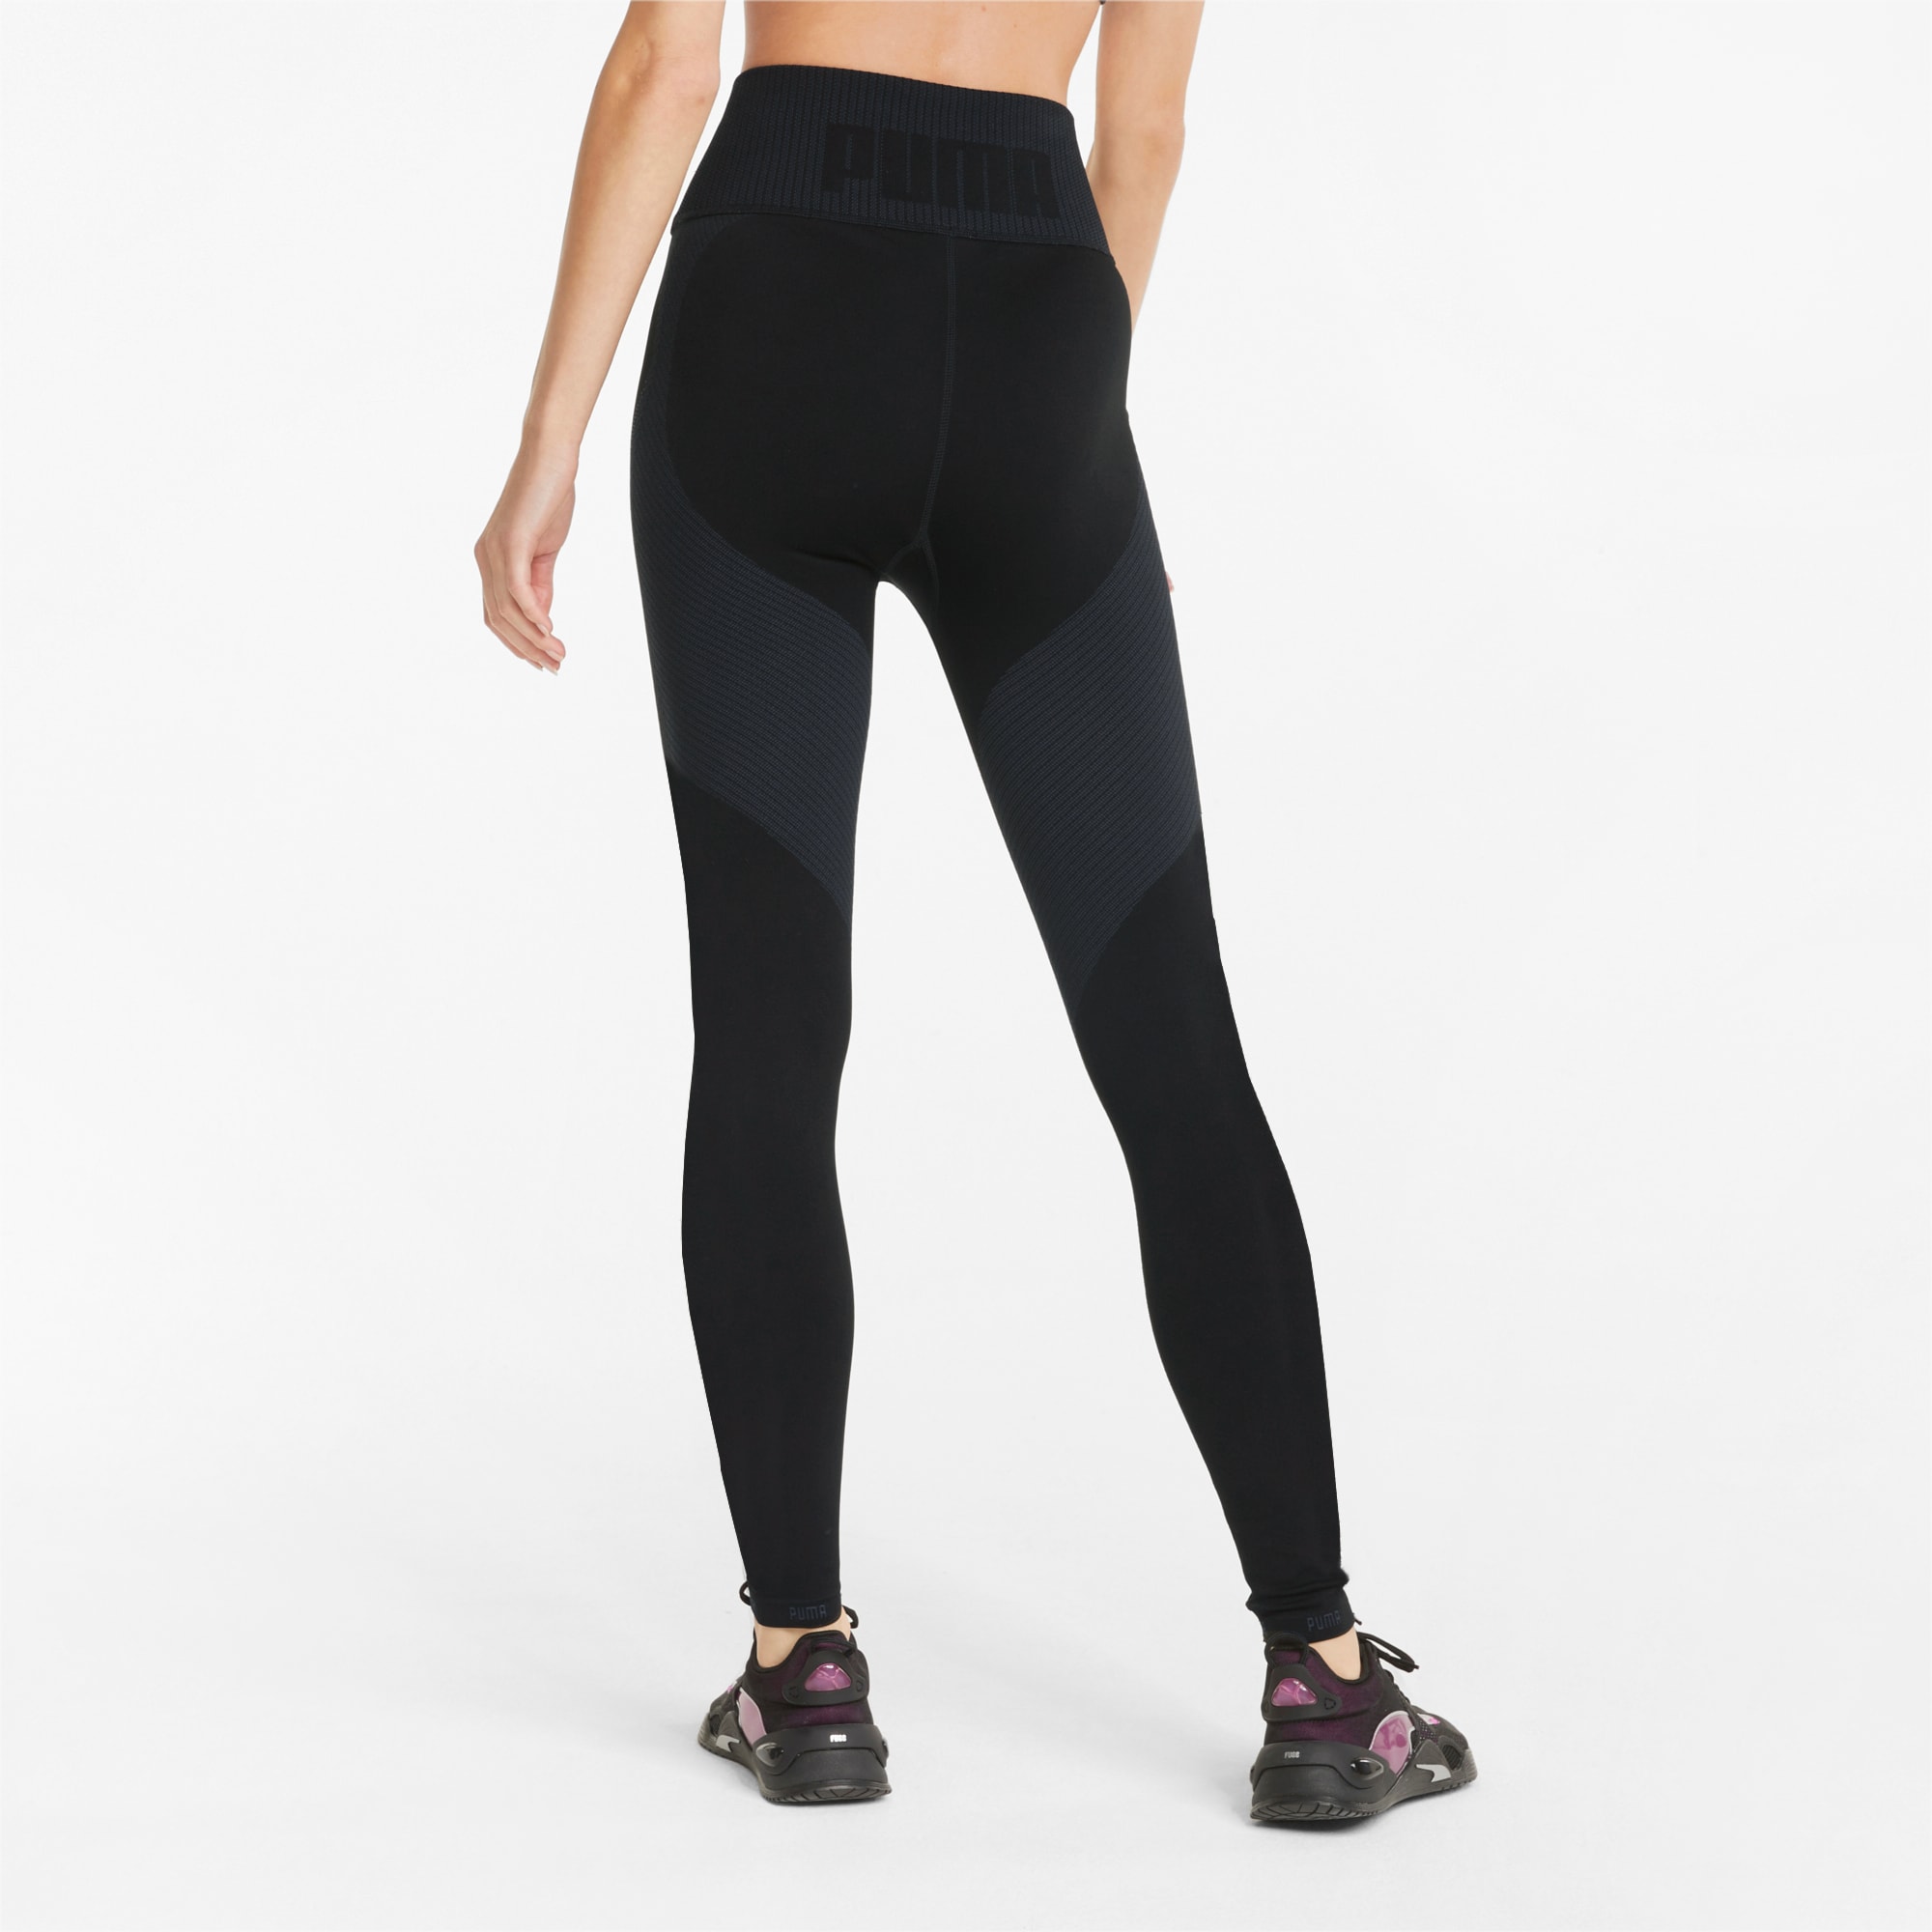 Puma Logo Lavender Athletic Training Compression Leggings Women Size S -  beyond exchange